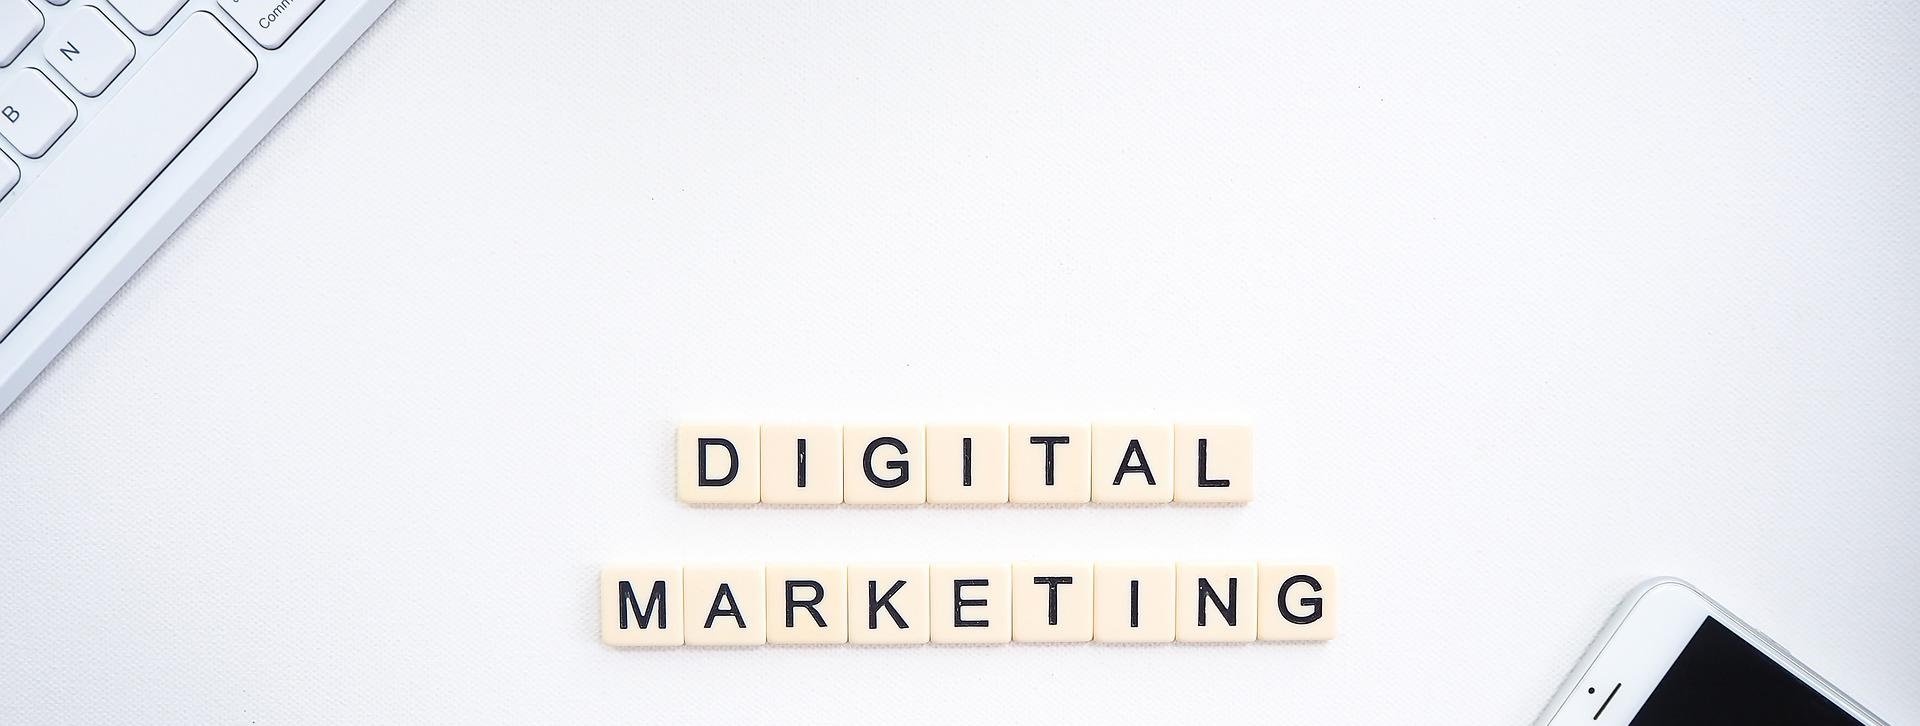 web marketing - digital marketing